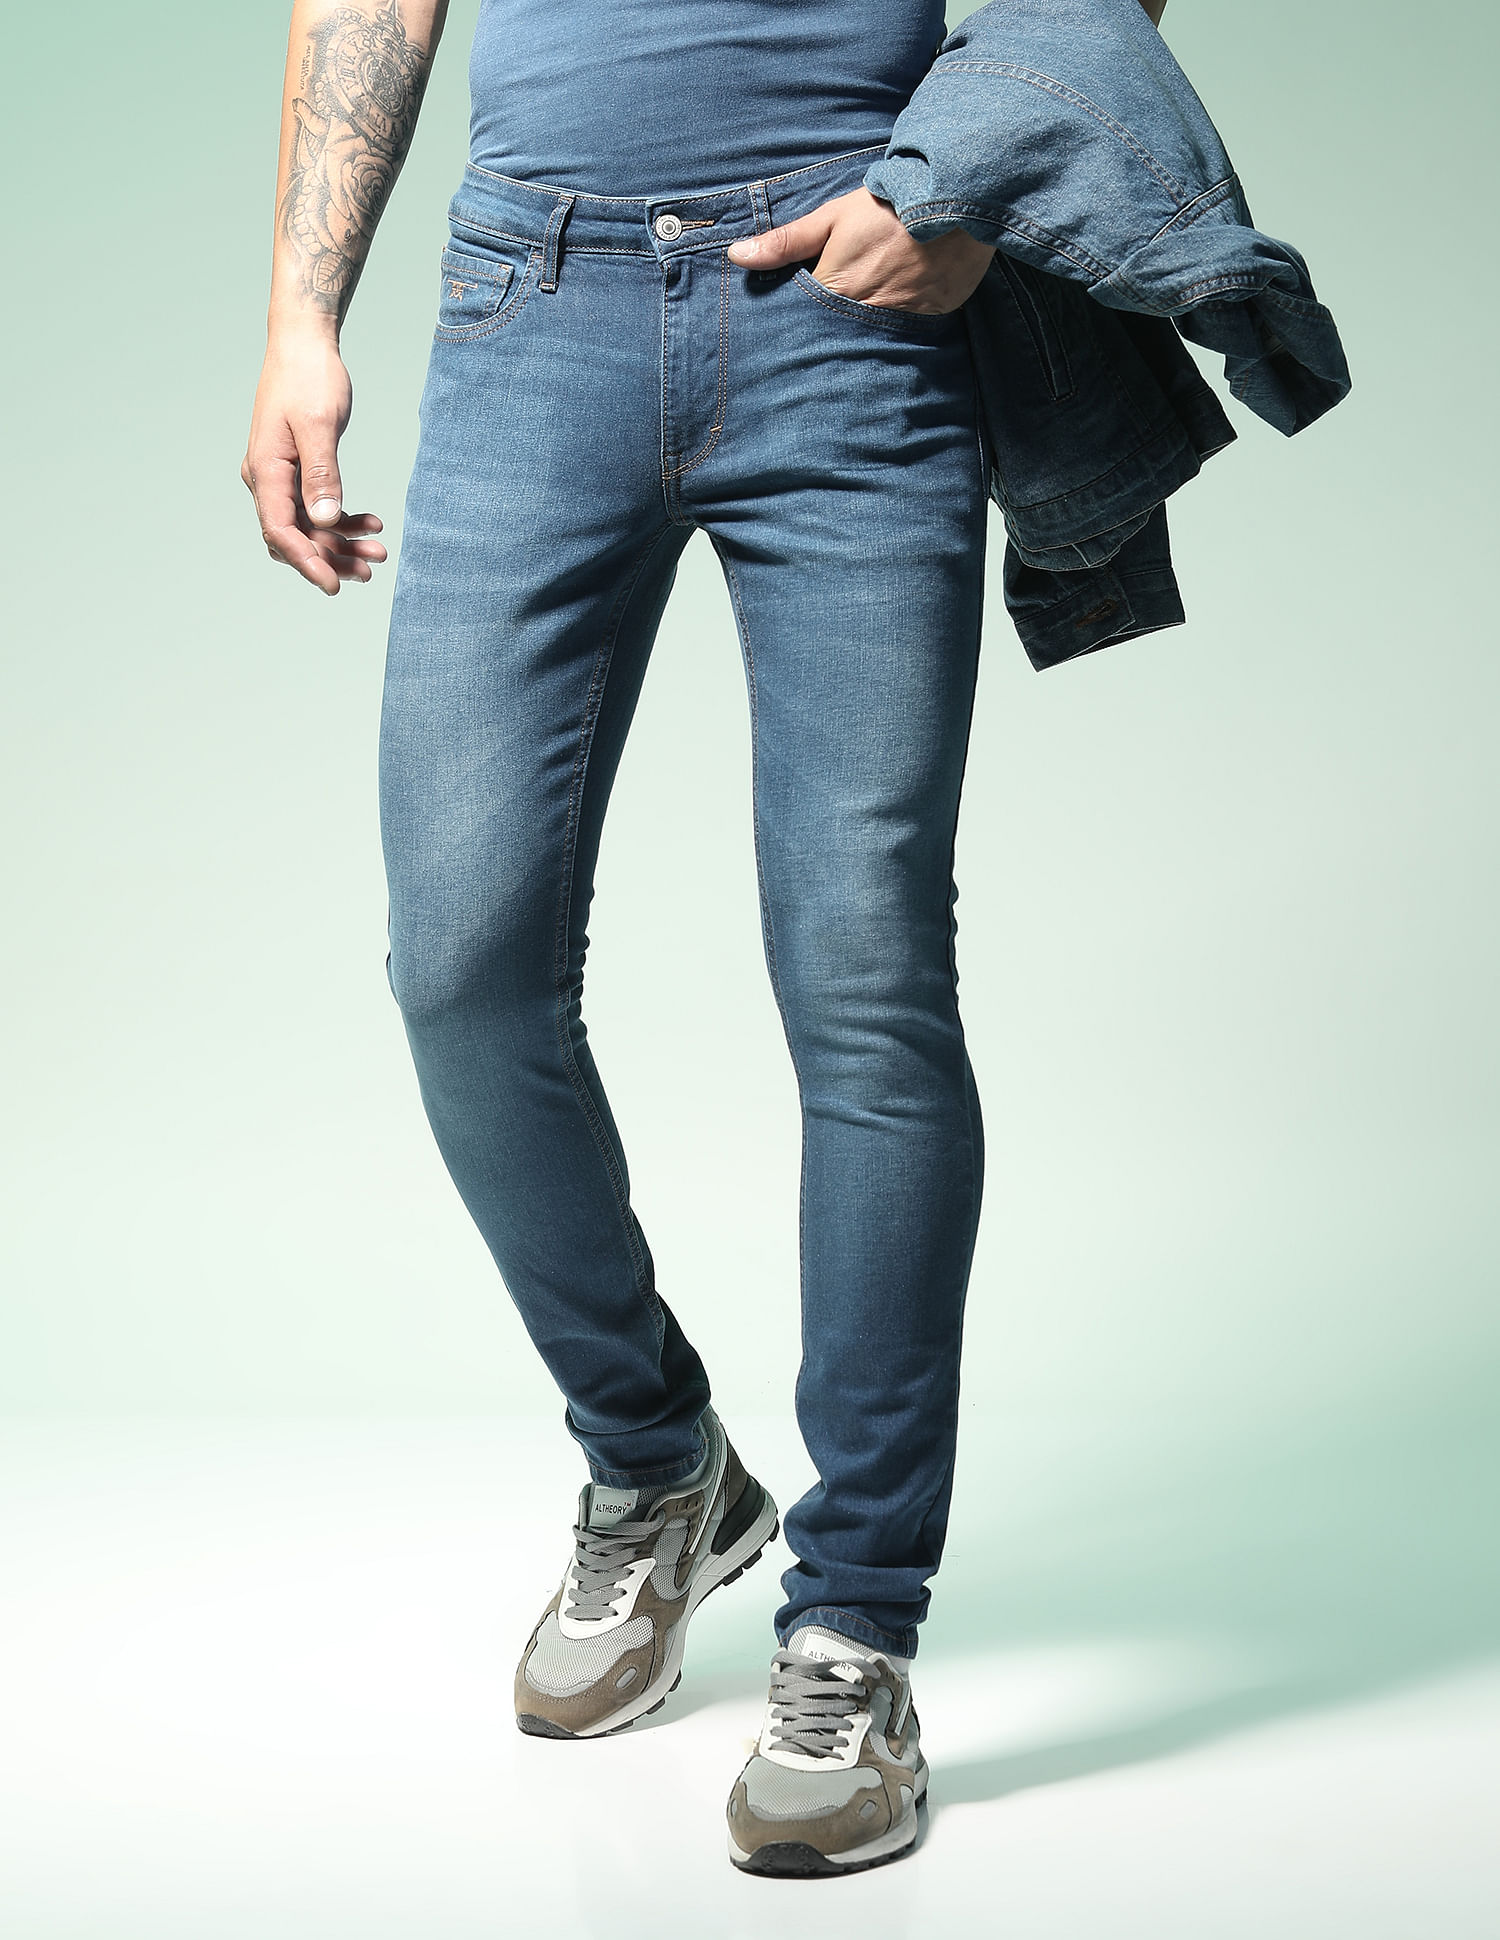 Stone Washed jeans for men - TOMMY JEANS - Pavidas-saigonsouth.com.vn